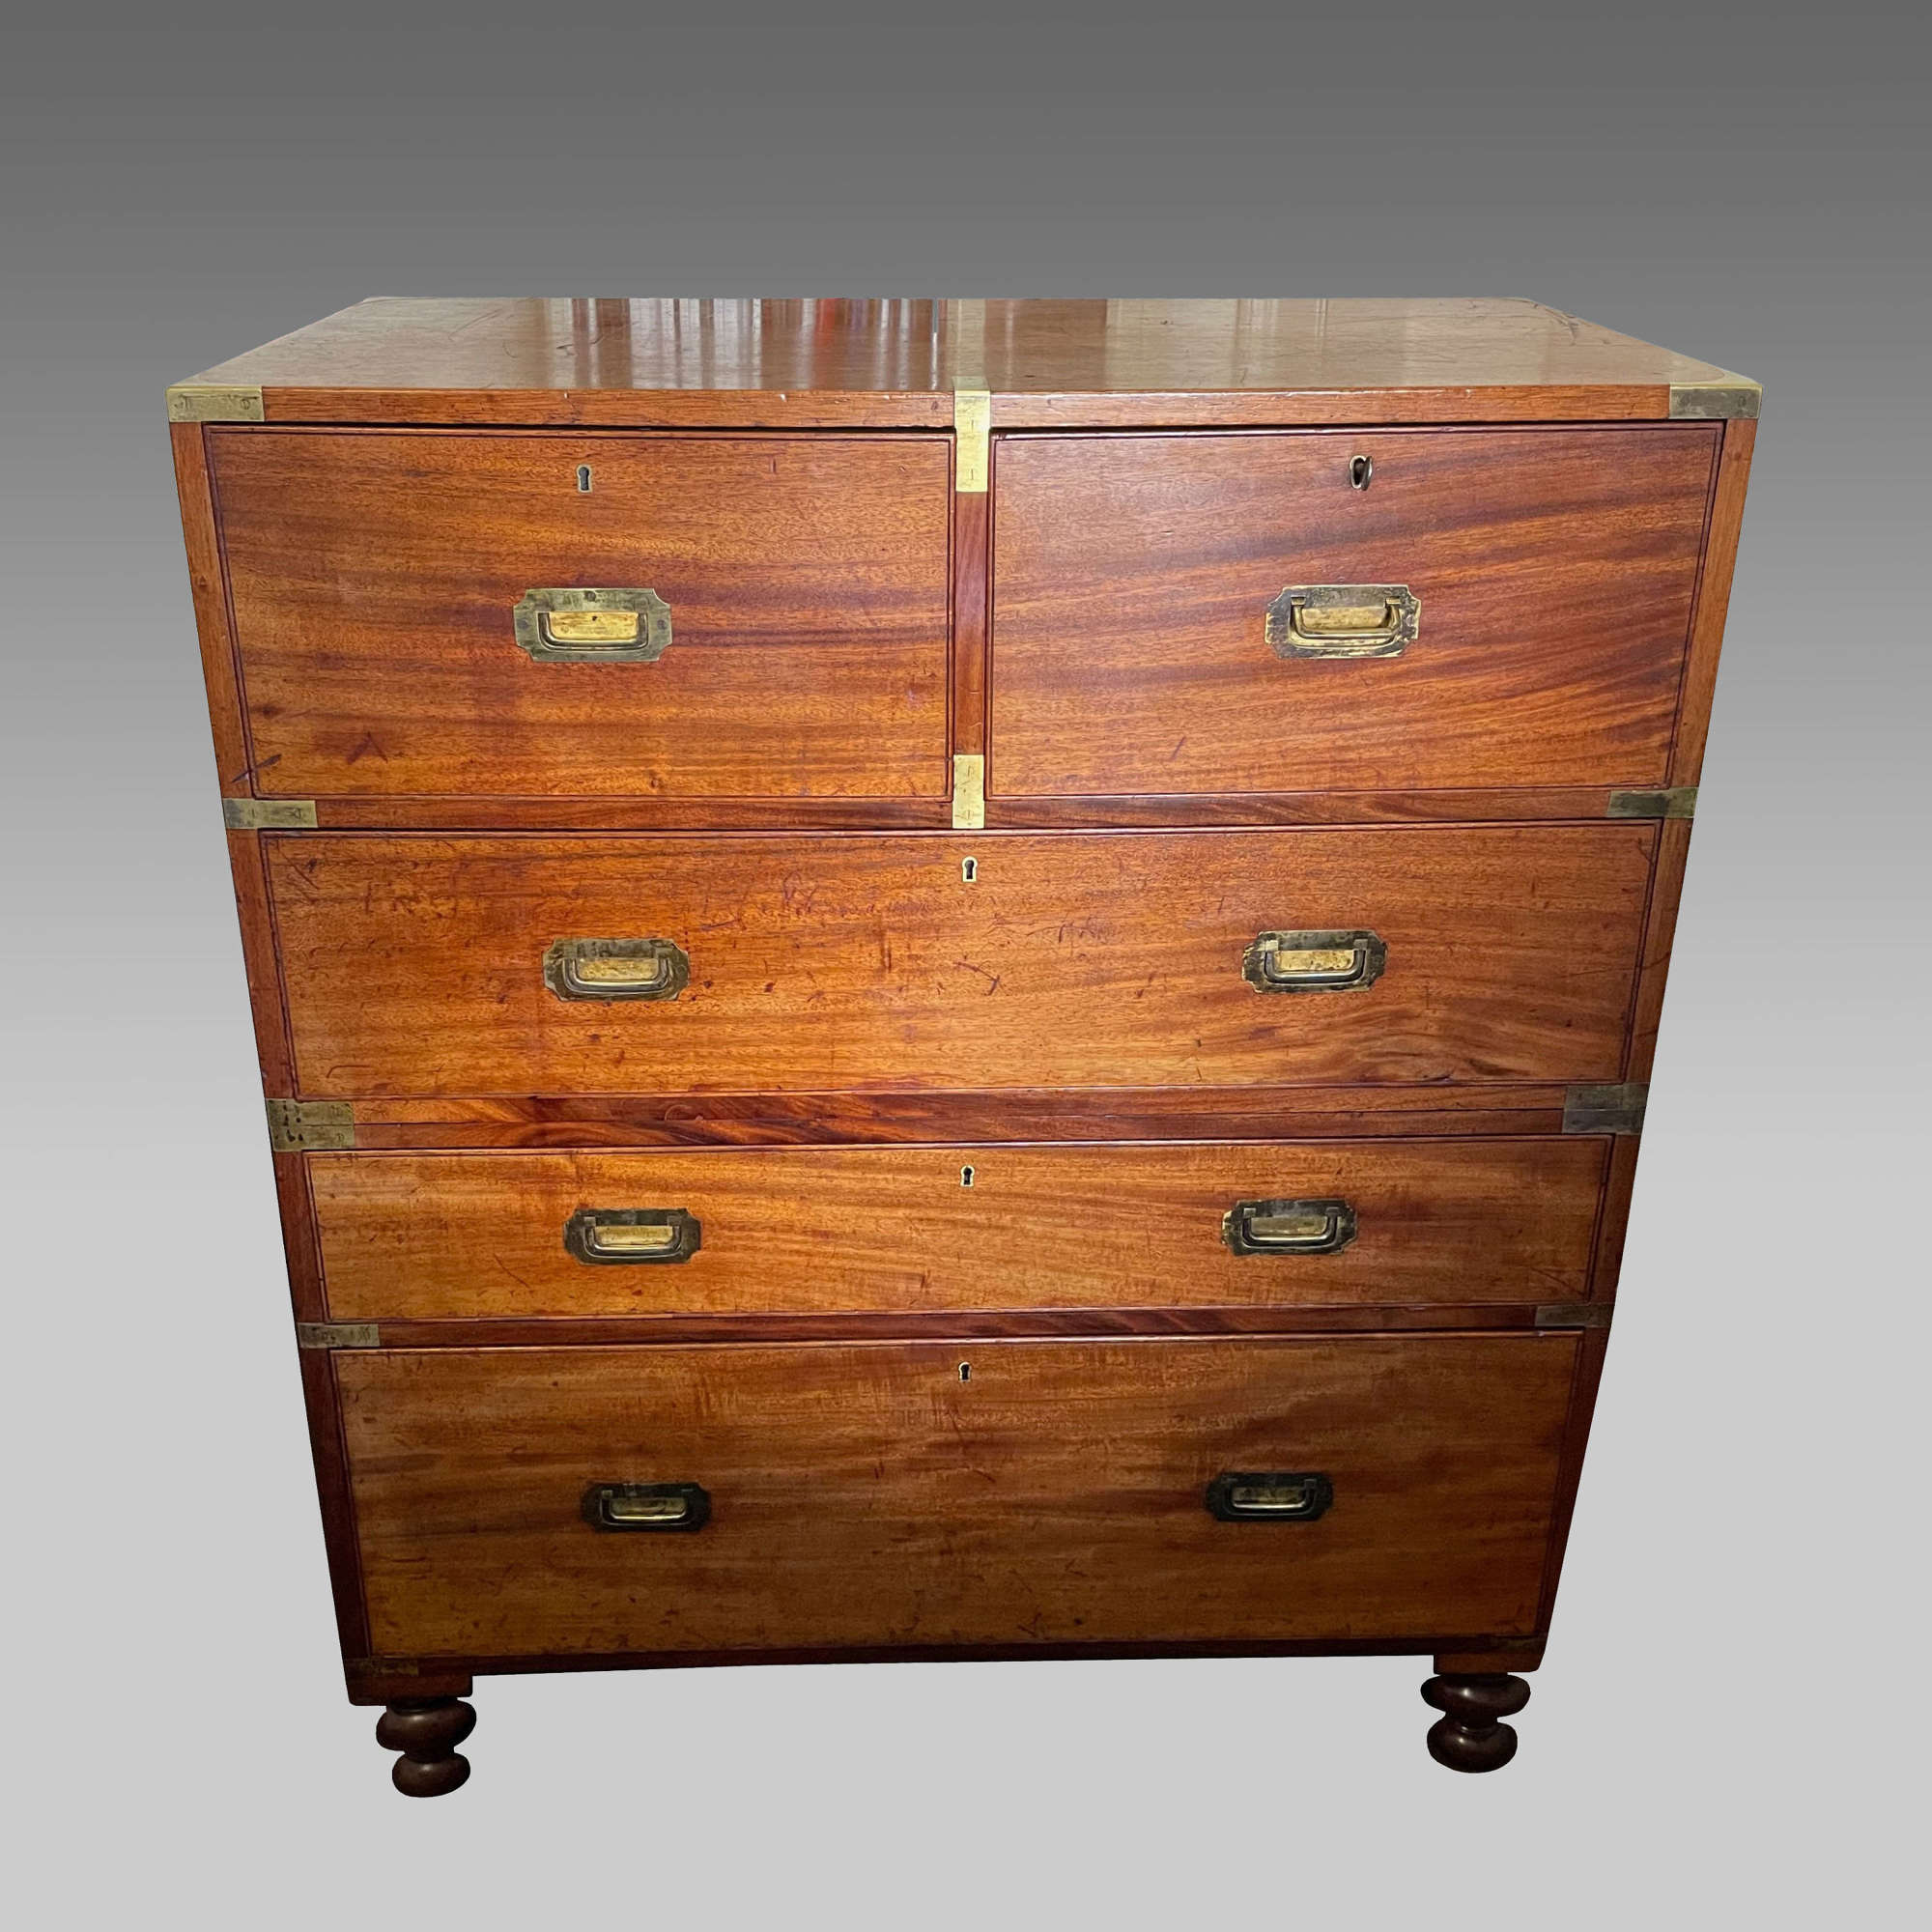 19th century mahogany brass bound secretaire military chest of drawers